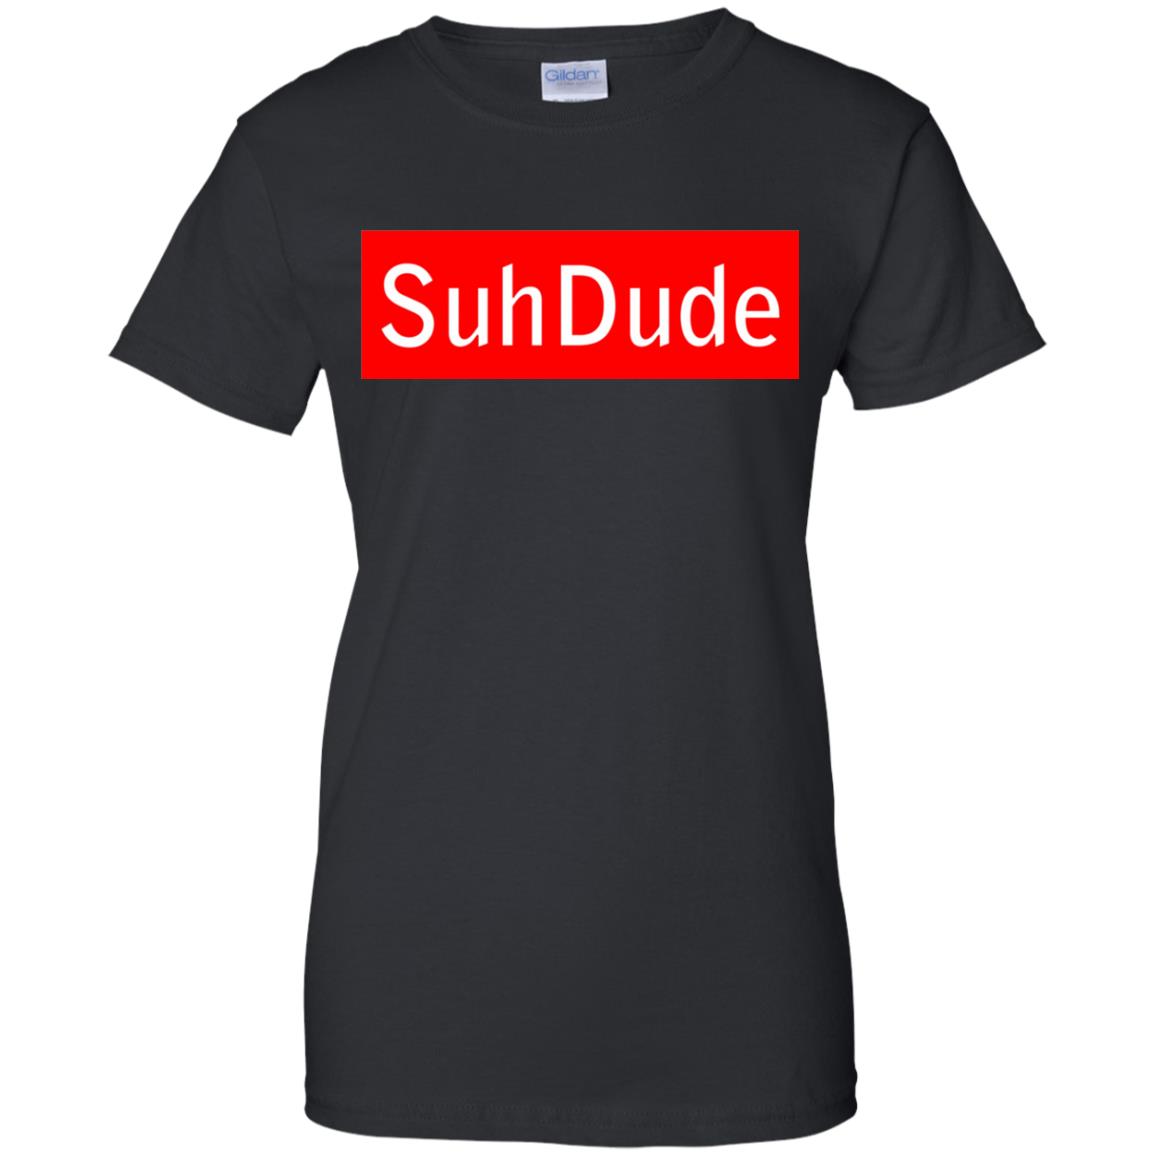 suh dude supreme womens t shirt - lady t shirt - black